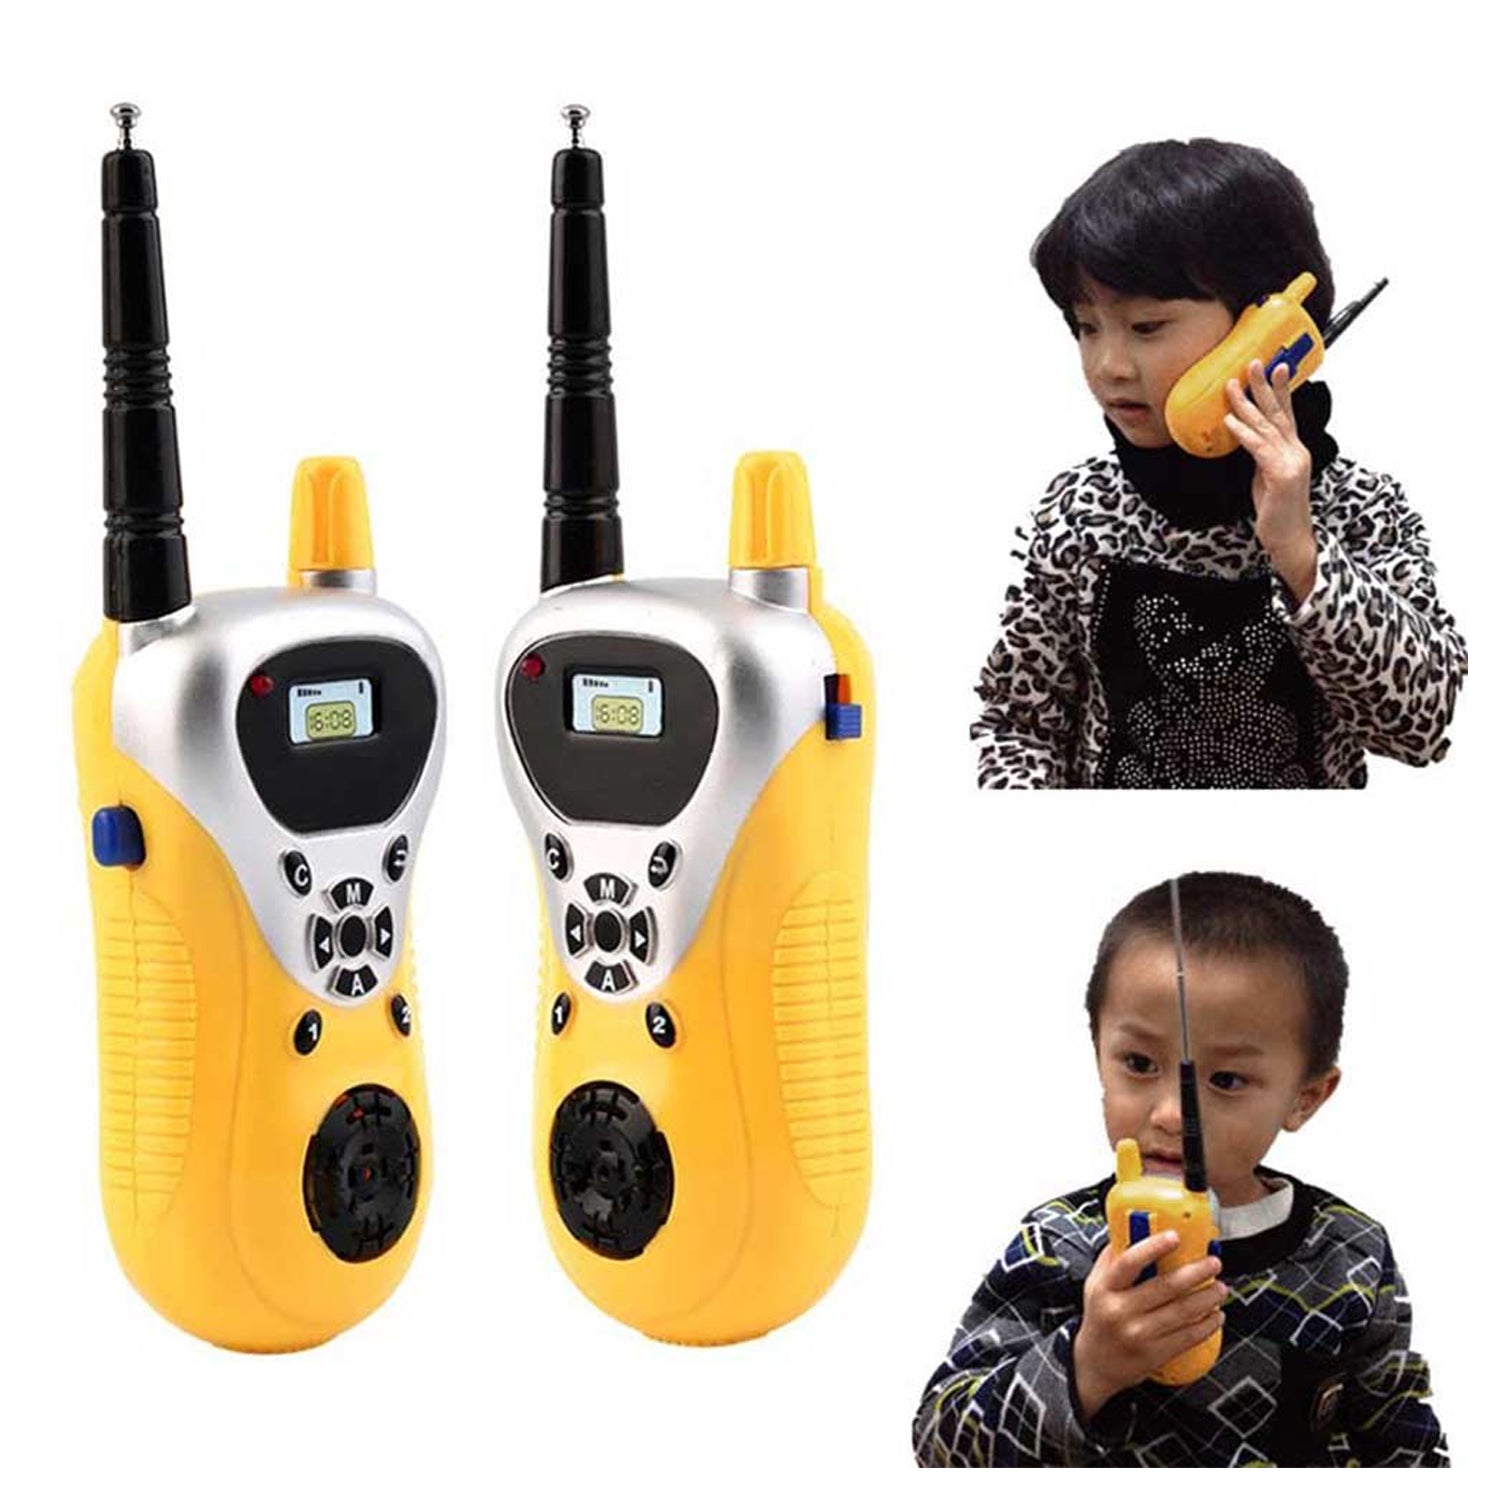 4481 Walkie Talkie Toys for Kids 2 Way Radio Toy for 3-12 Year Old Boys Girls, Up to 80 Meter Outdoor Range DeoDap